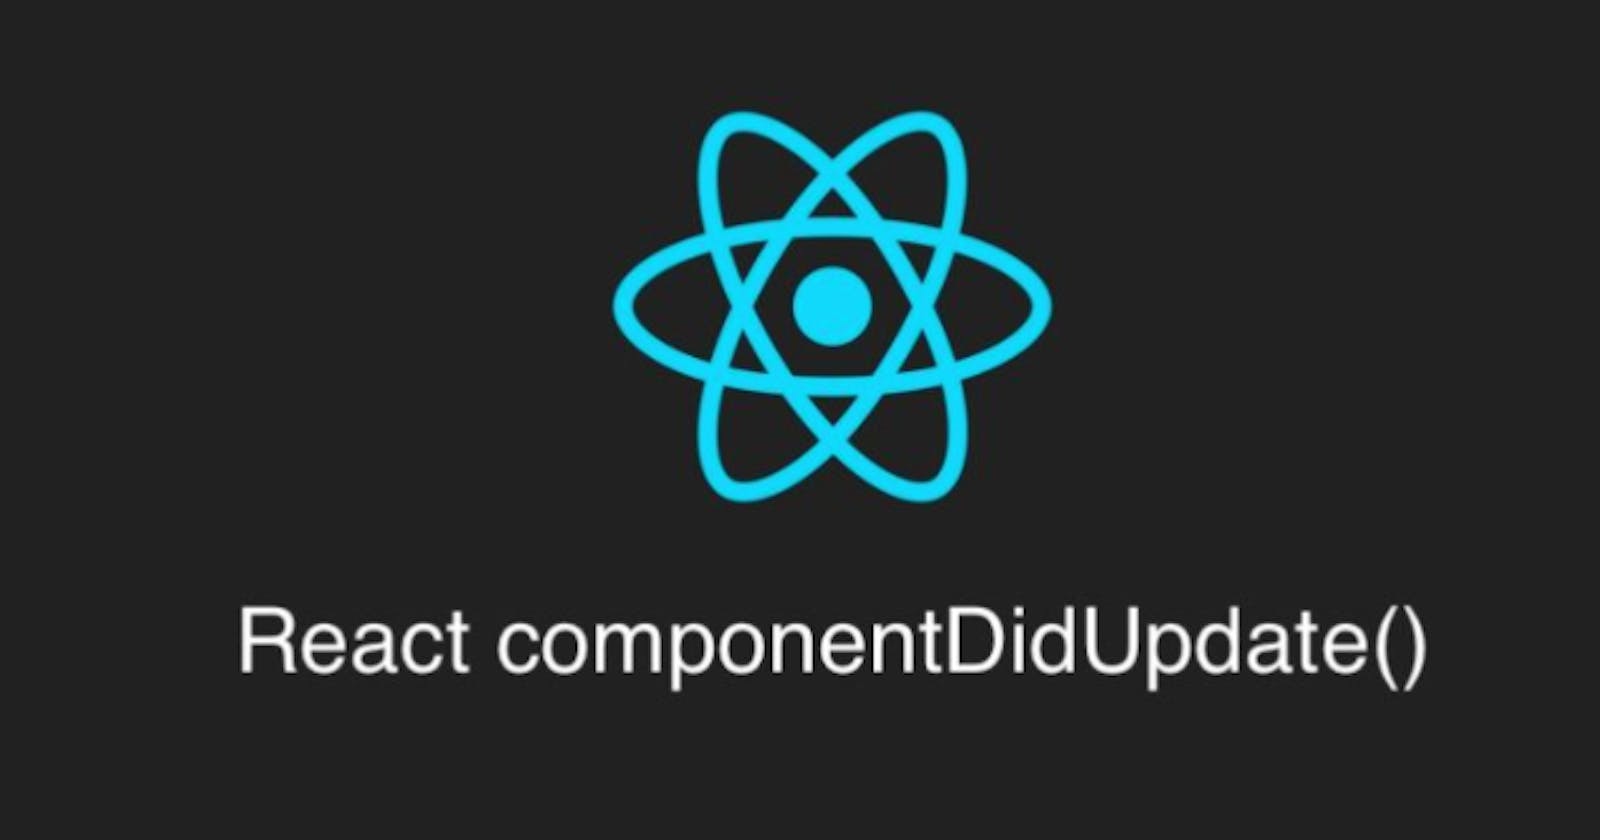 Quickly Understand React's componentDidUpdate() API